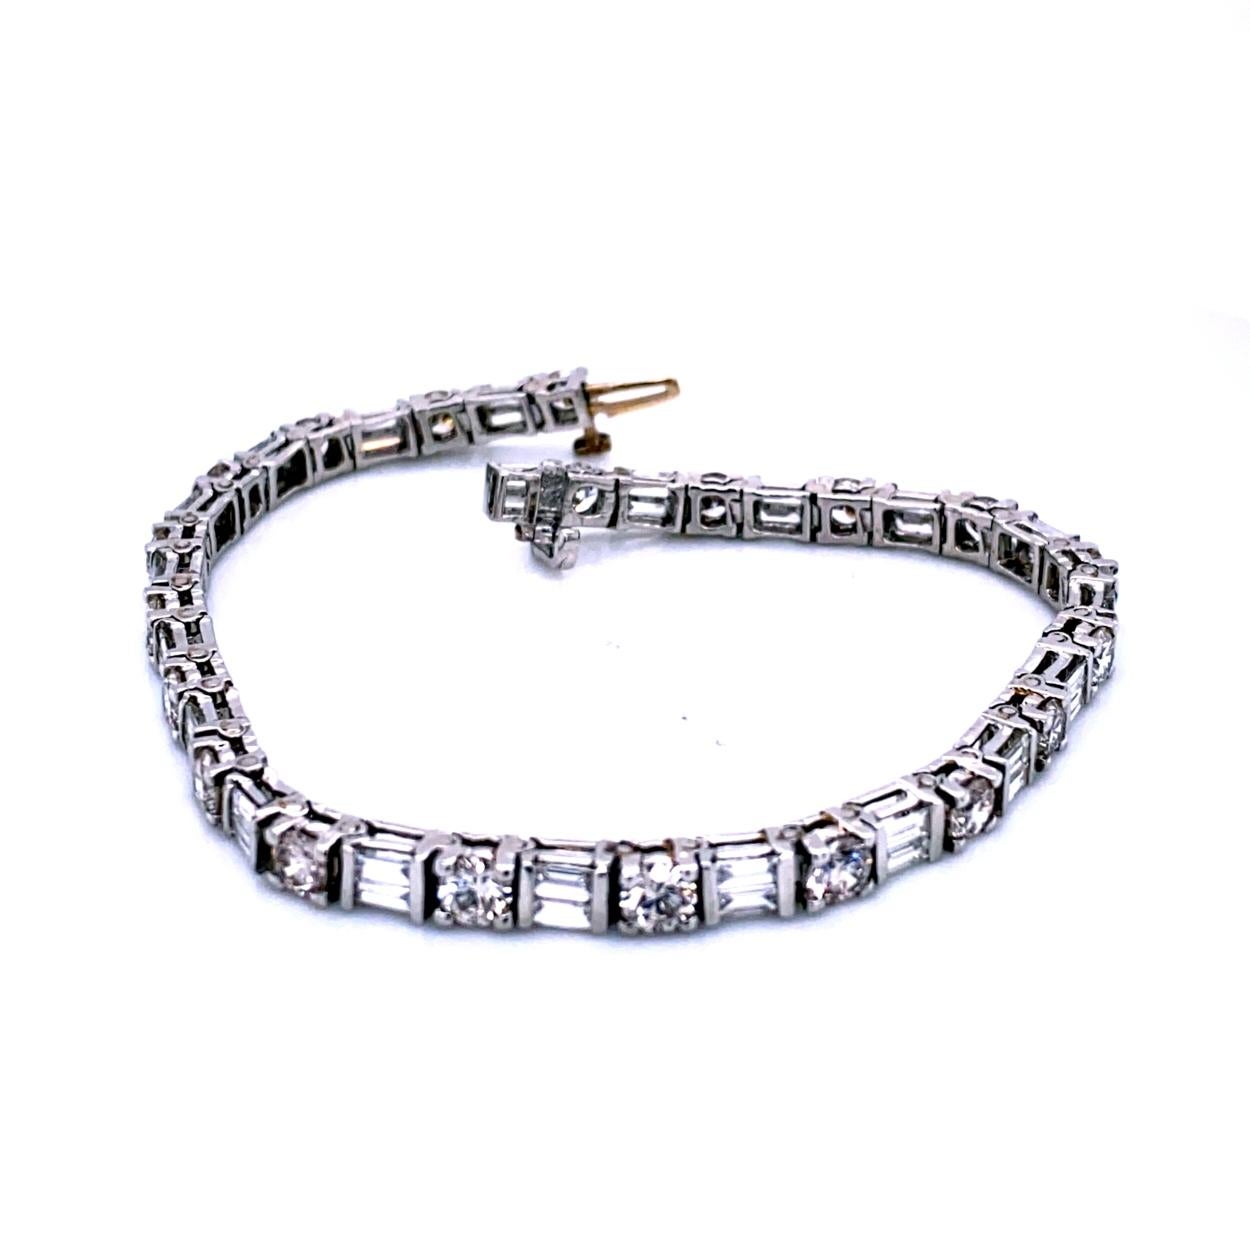 baguette diamond tennis bracelet